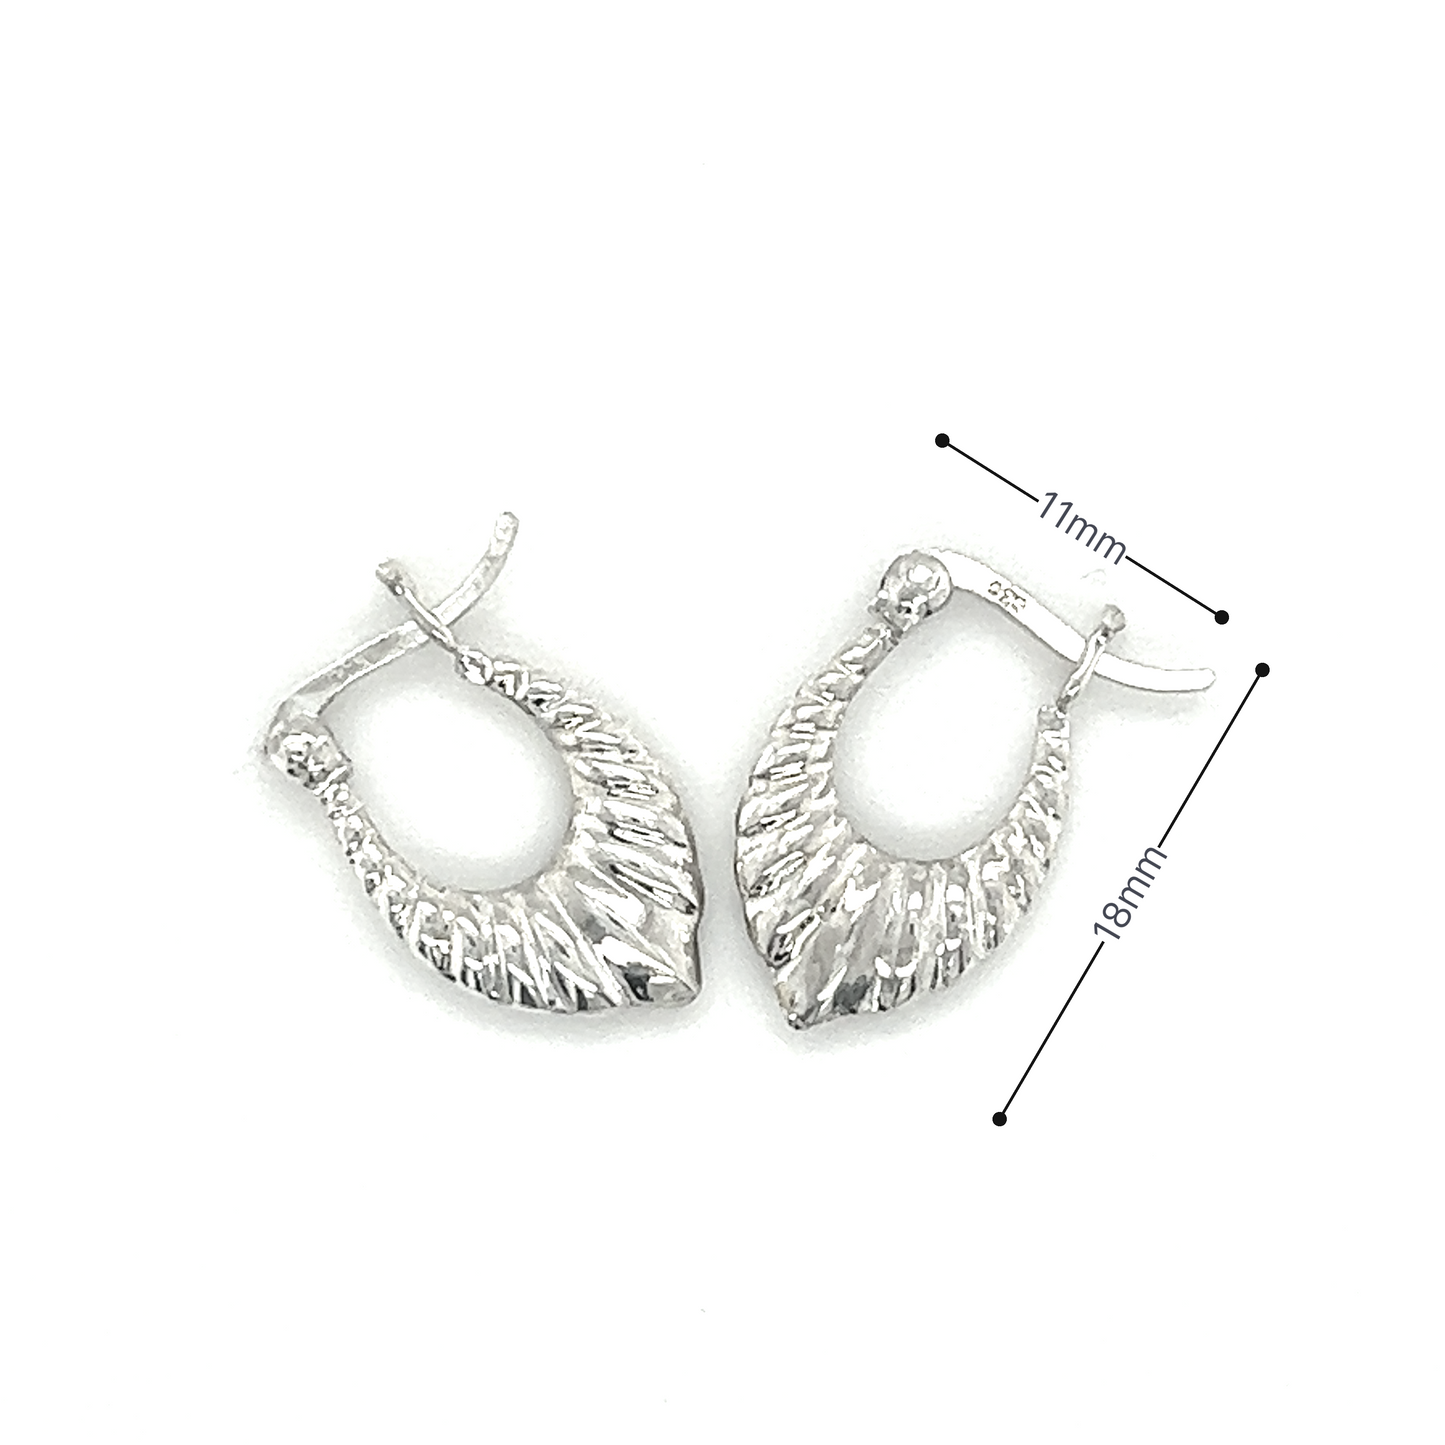 A pair of Super Silver Dainty Latch Hoop Earrings.